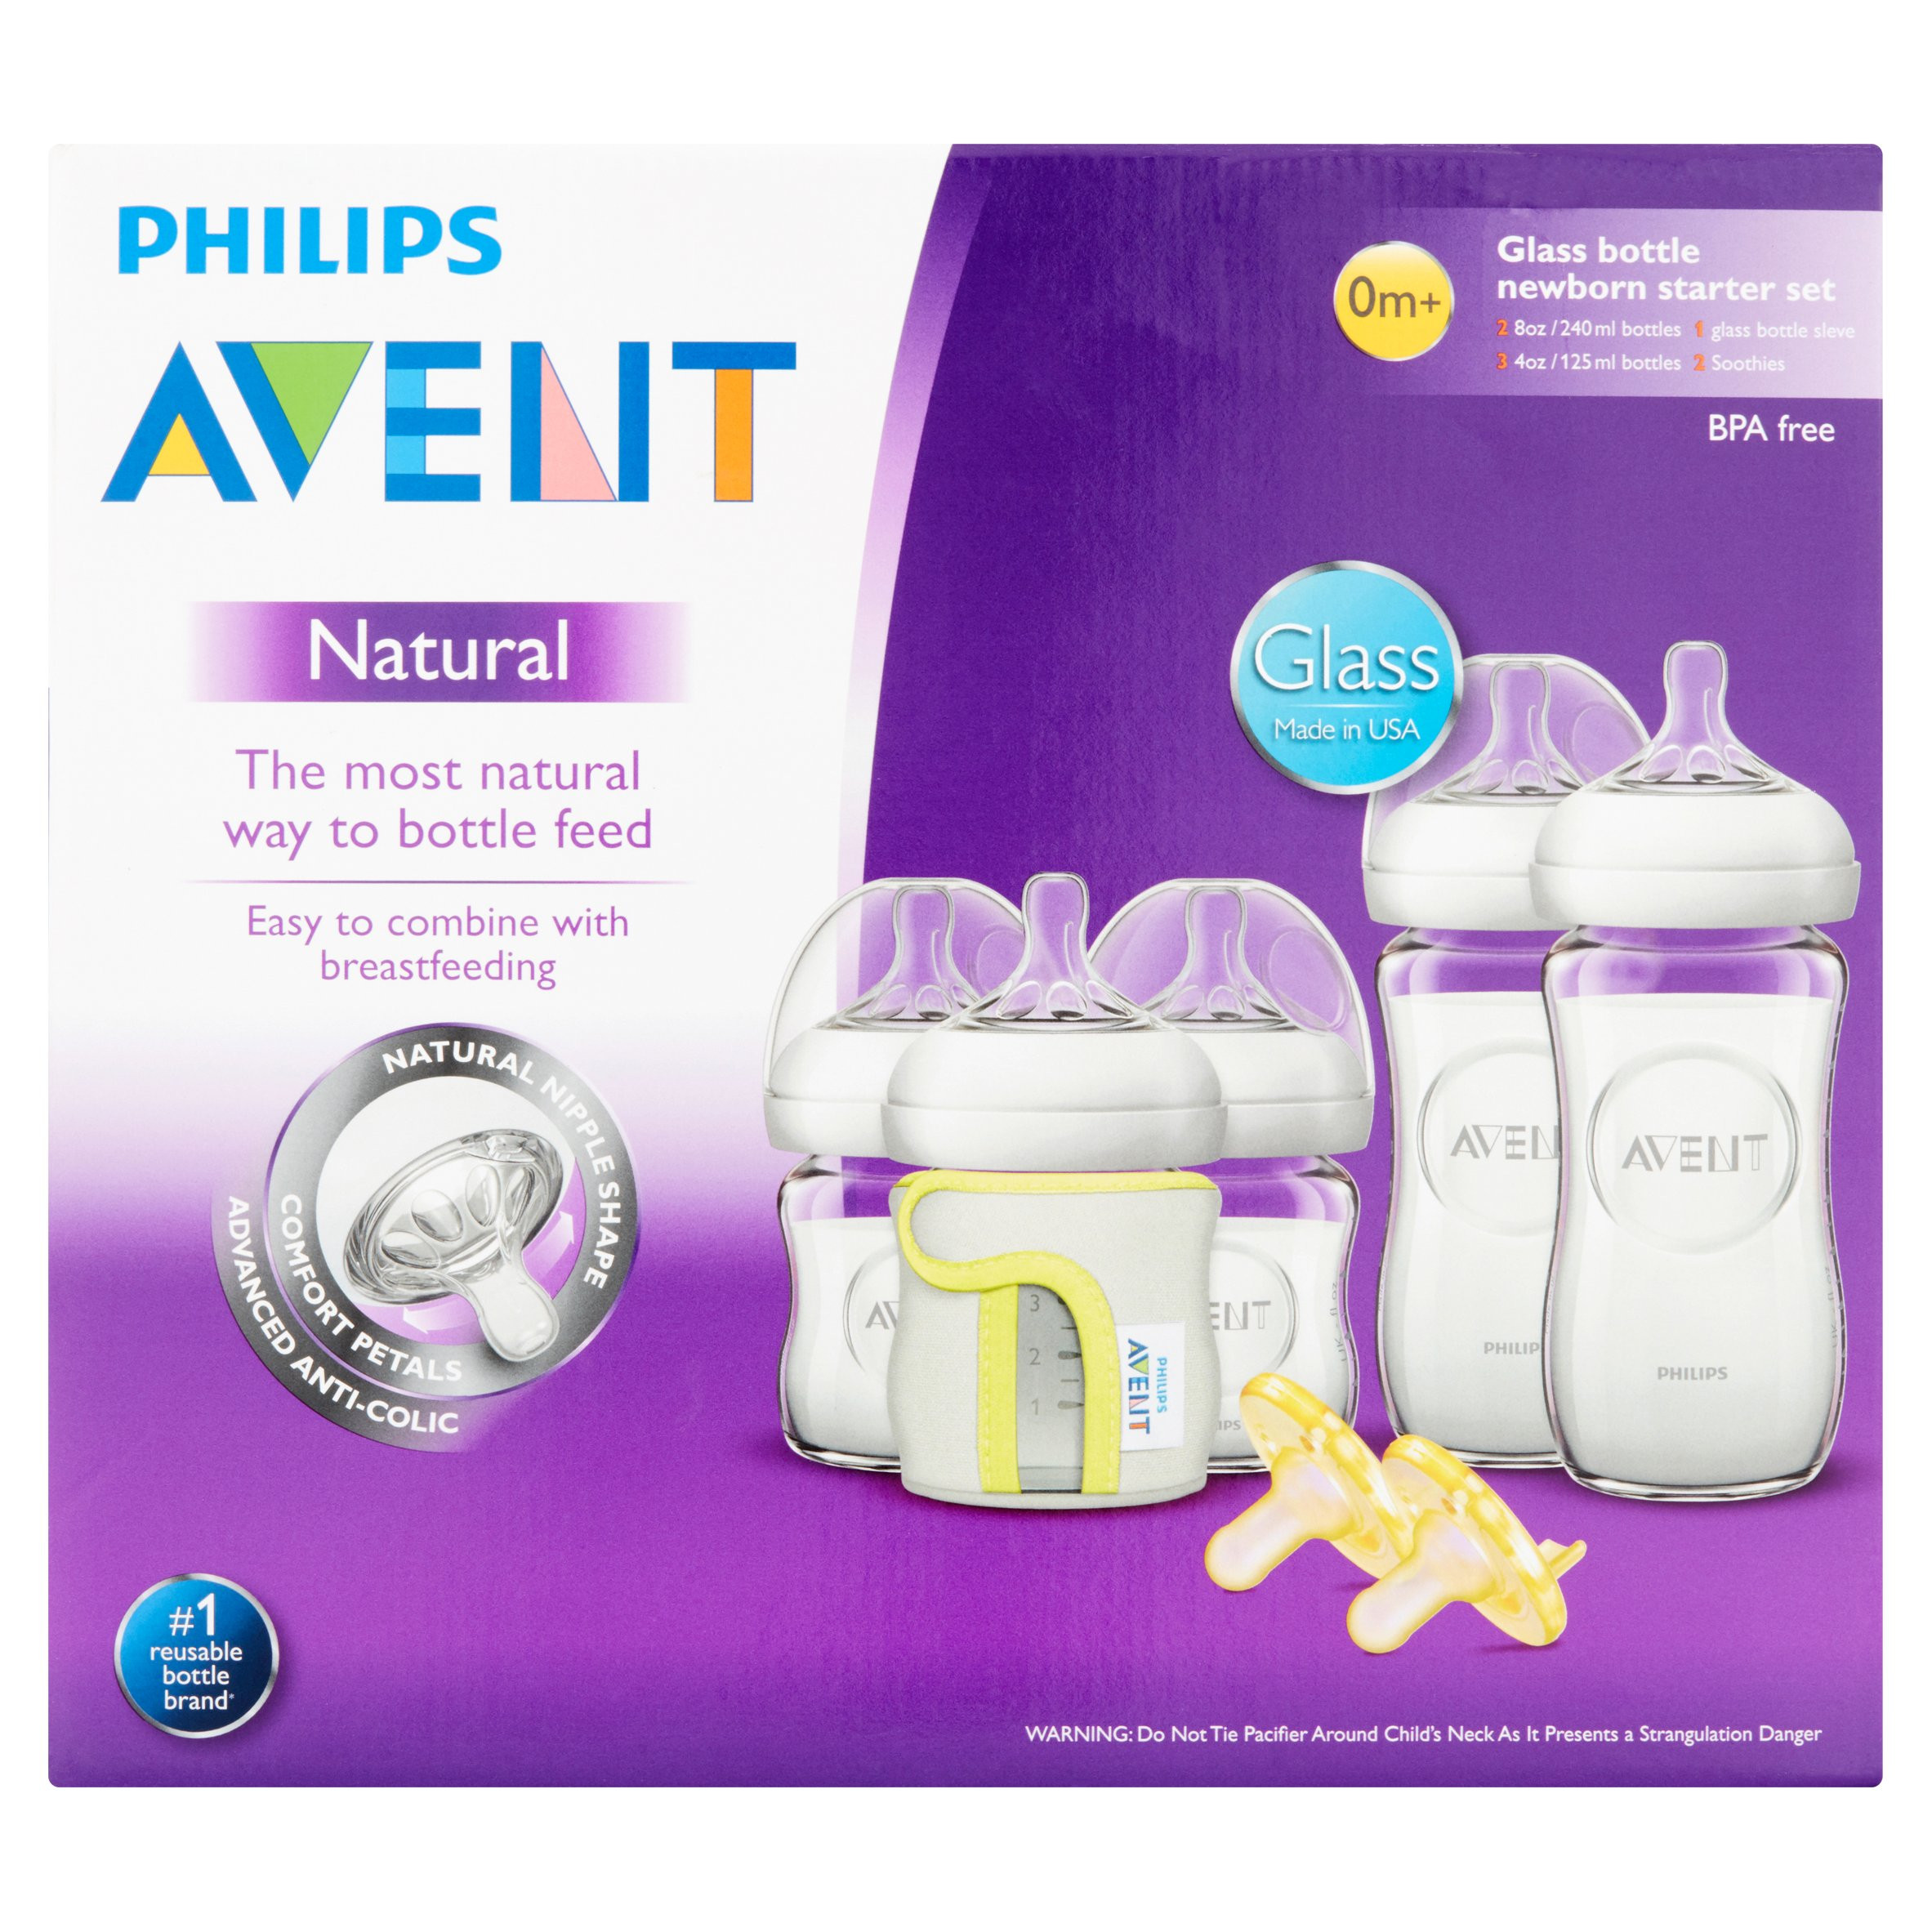 Philips Avent Natural Baby Bottle Newborn Starter Gift Set
 Philips Avent Natural Glass Baby Bottle Newborn Starter